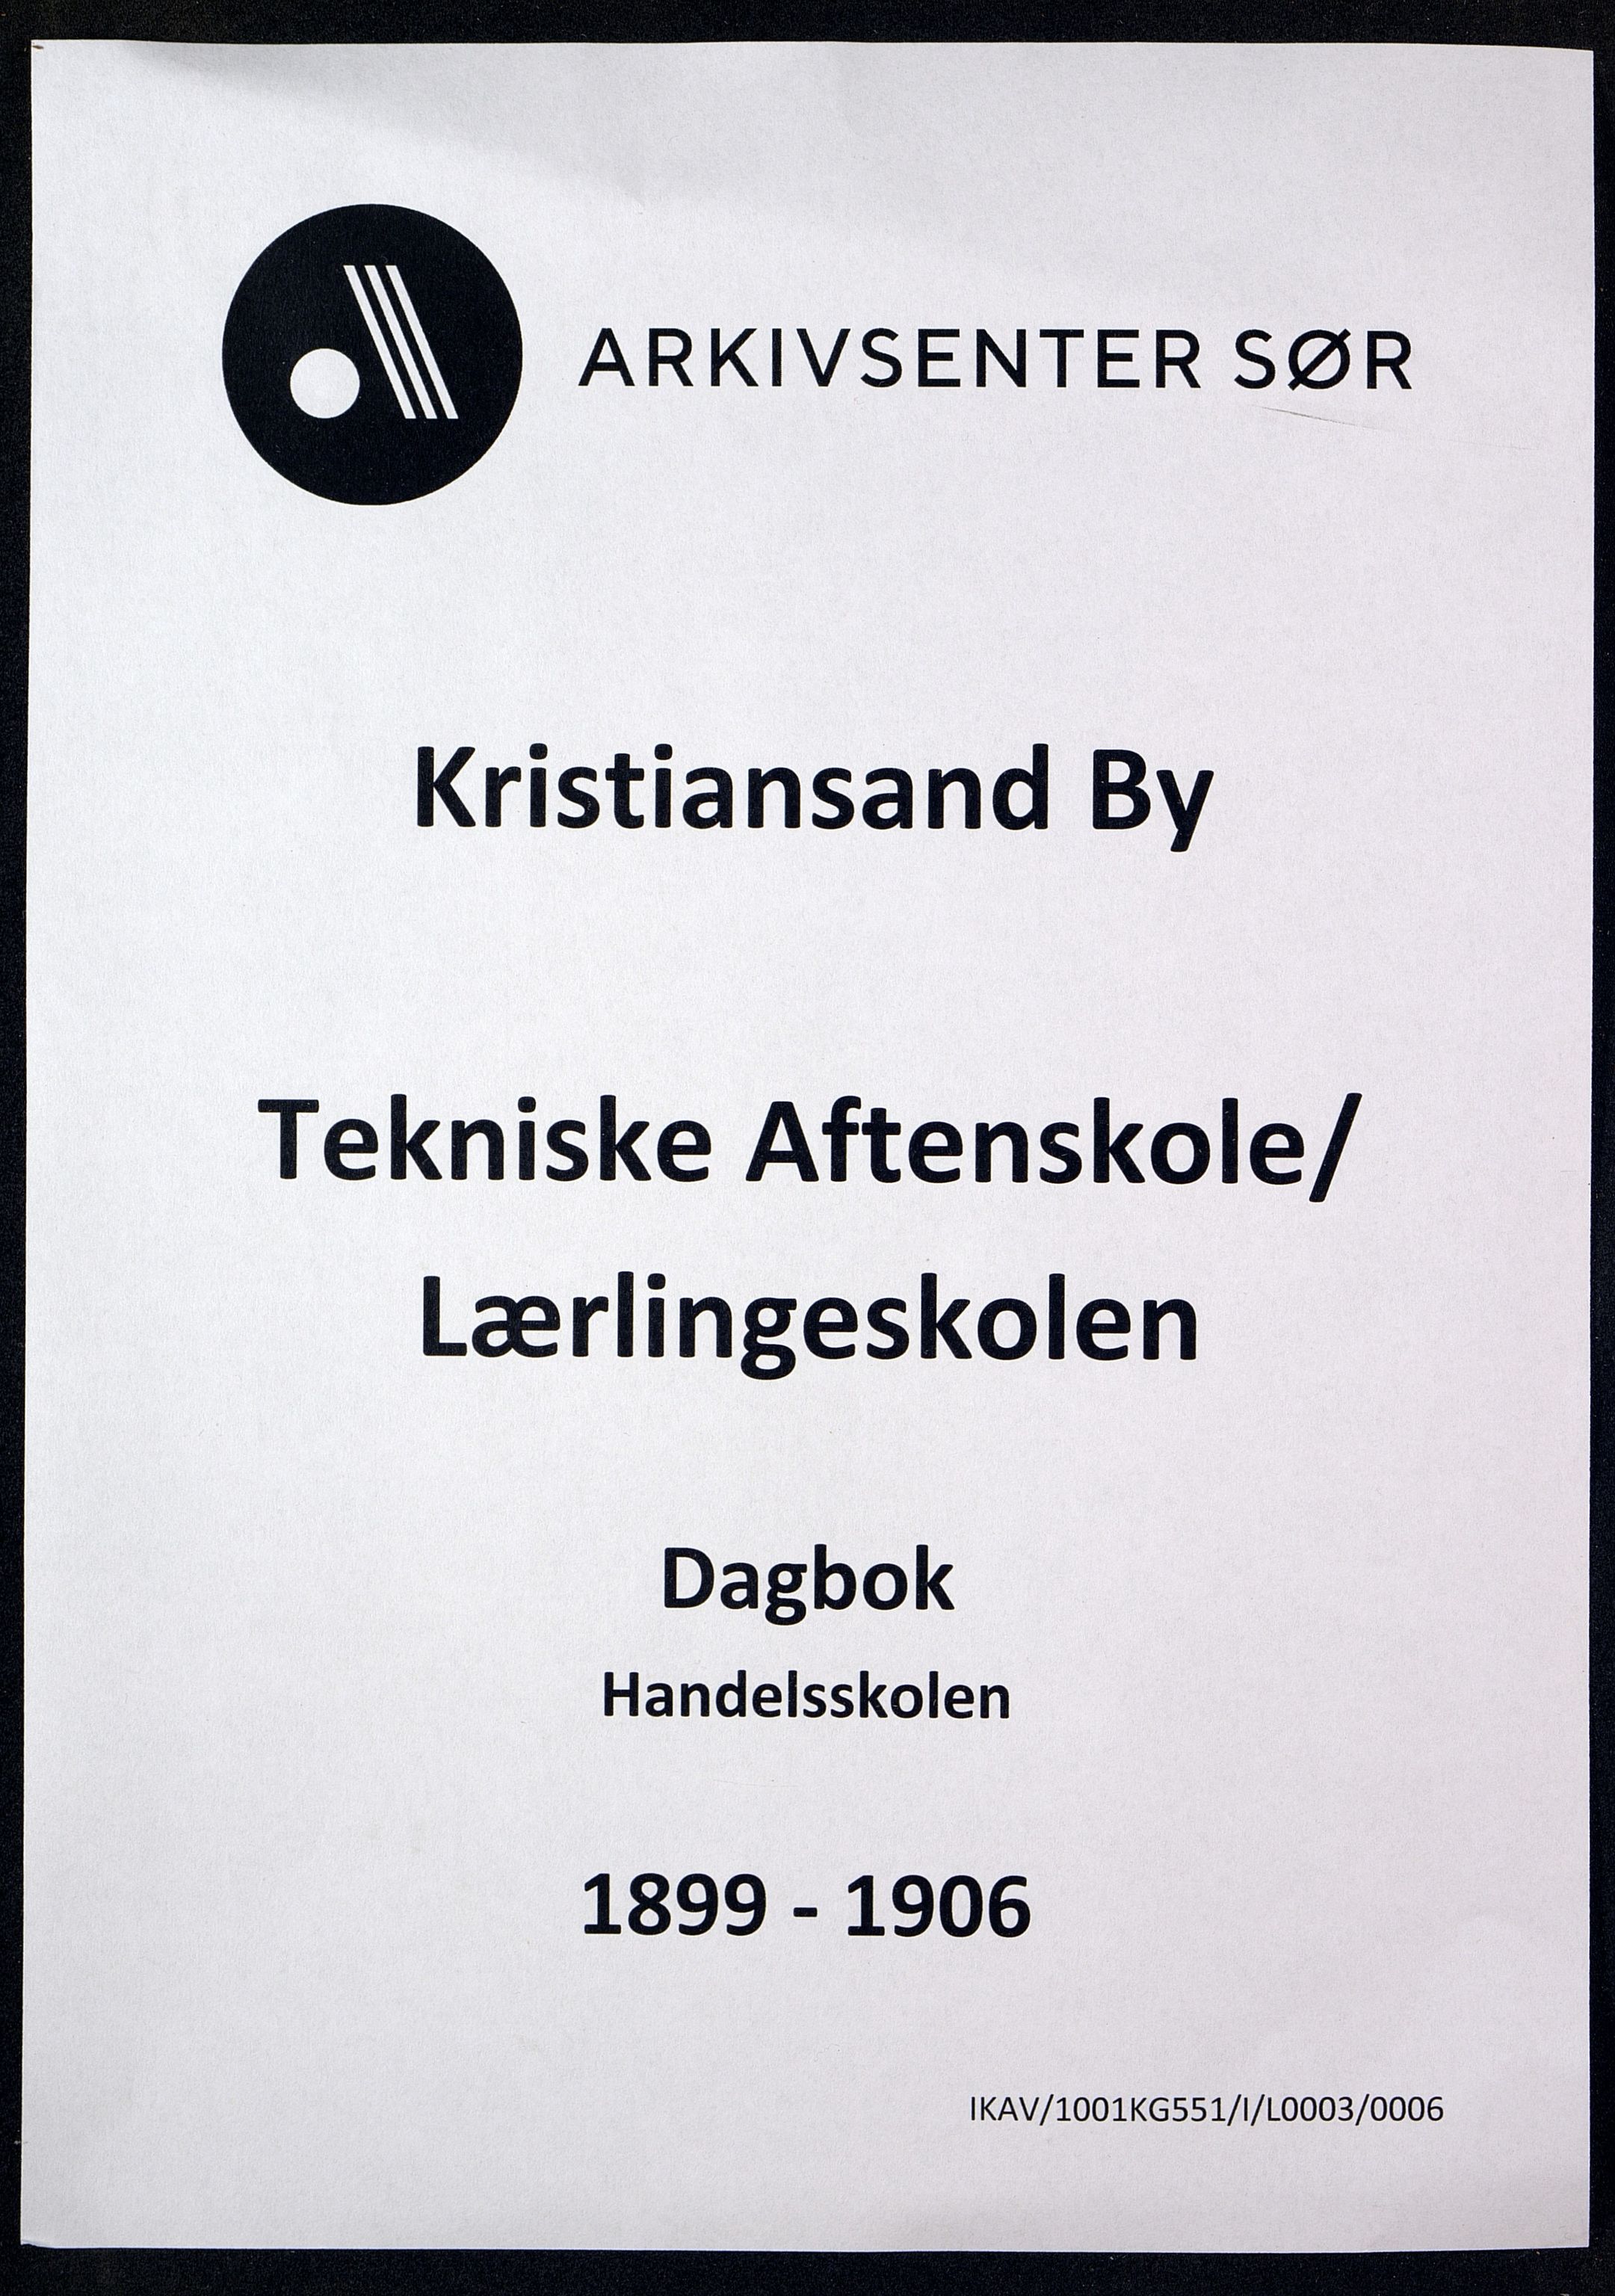 Kristiansand By - Kristiansand Tekniske Aftenskole/Lærlingeskolen, IKAV/1001KG551/I/L0003/0006: Dagbøker / Dagbok, handelsskolen, 1899-1906